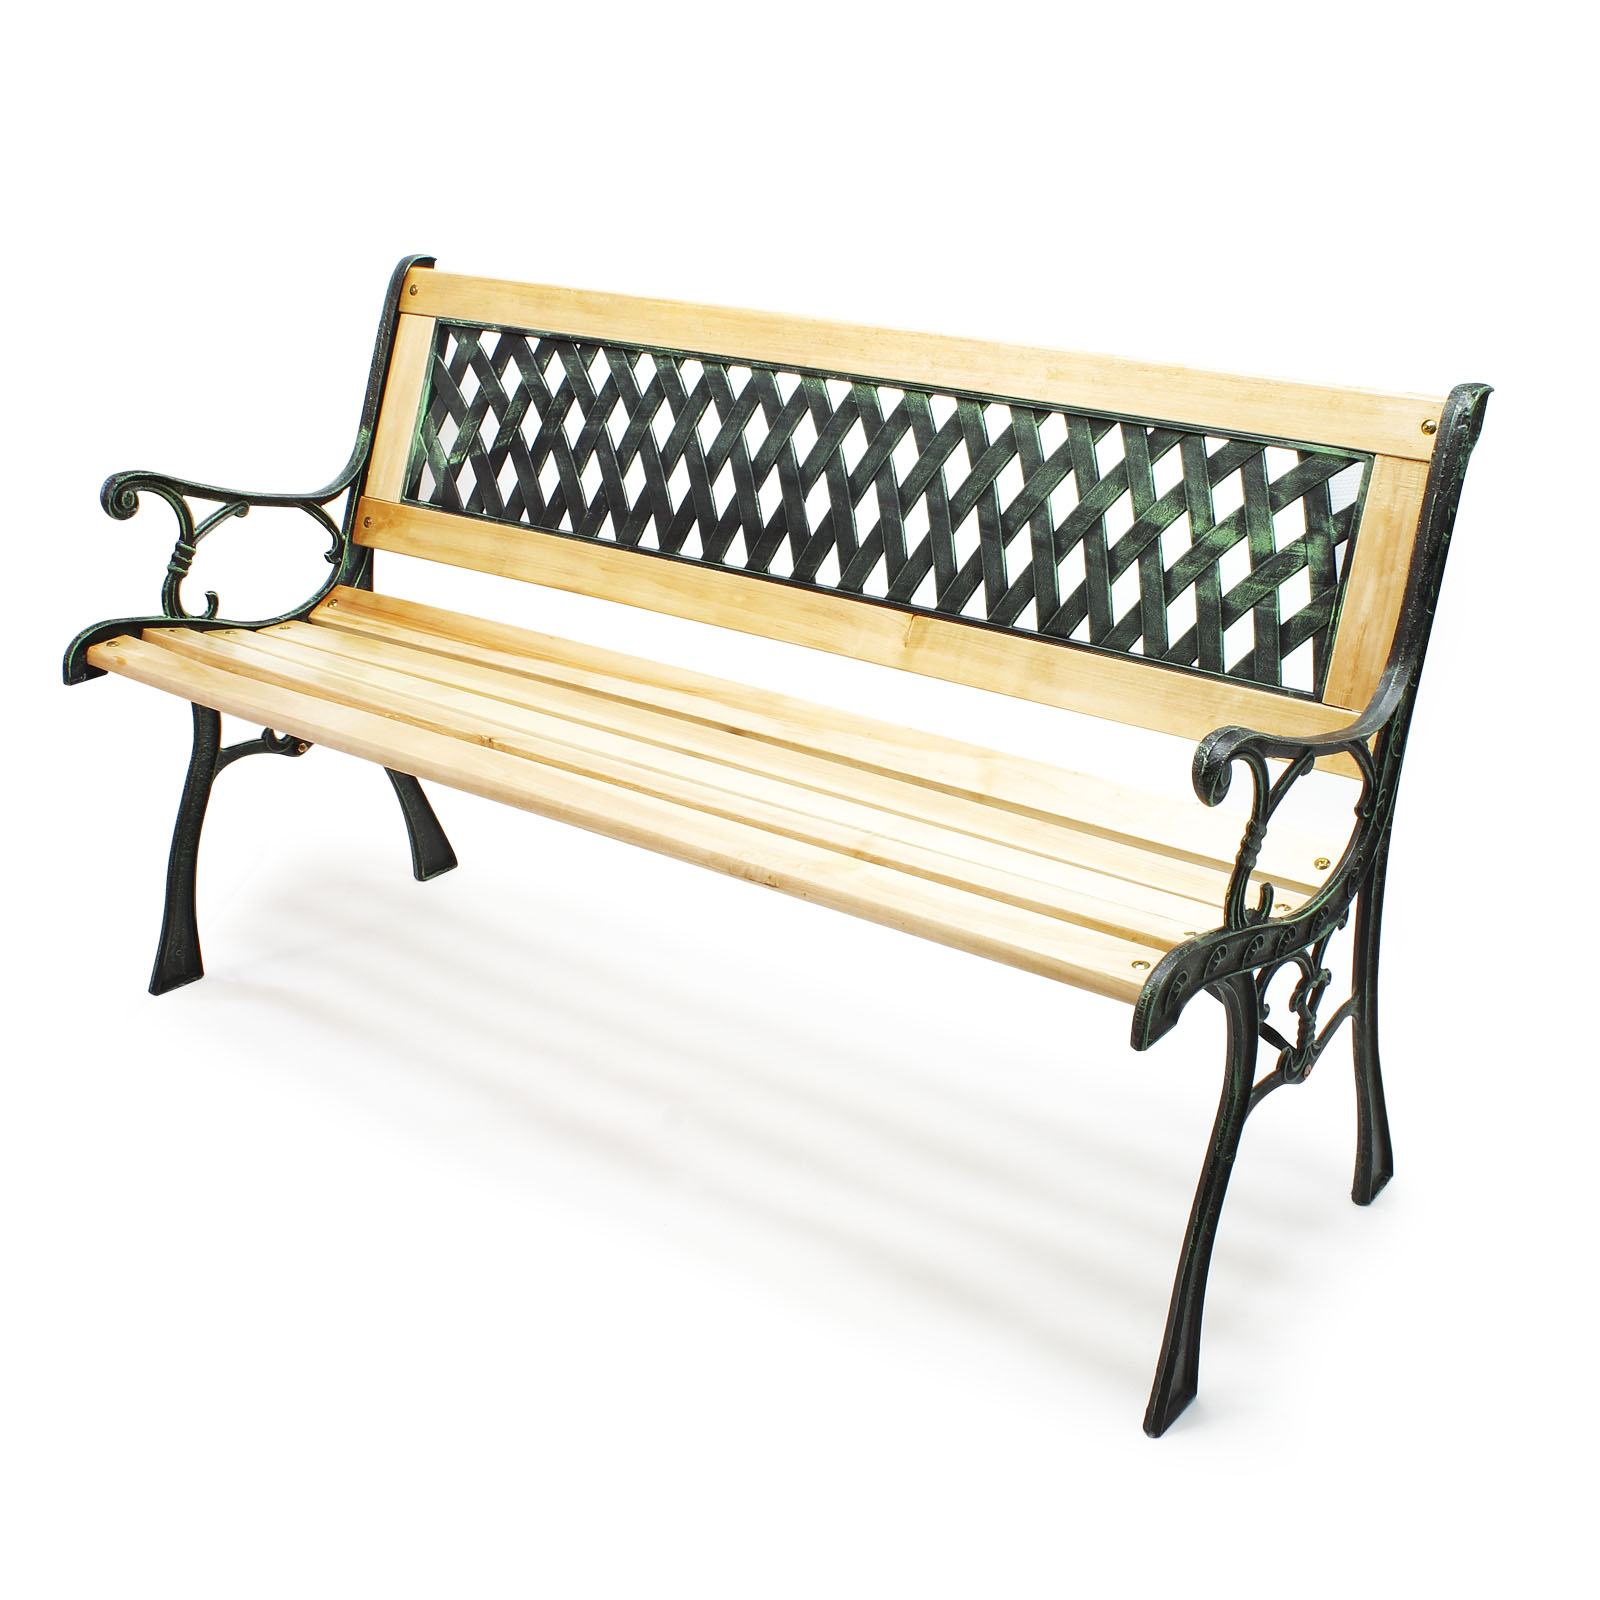 Garden bench park seat Inge wood iron lattice-patterned